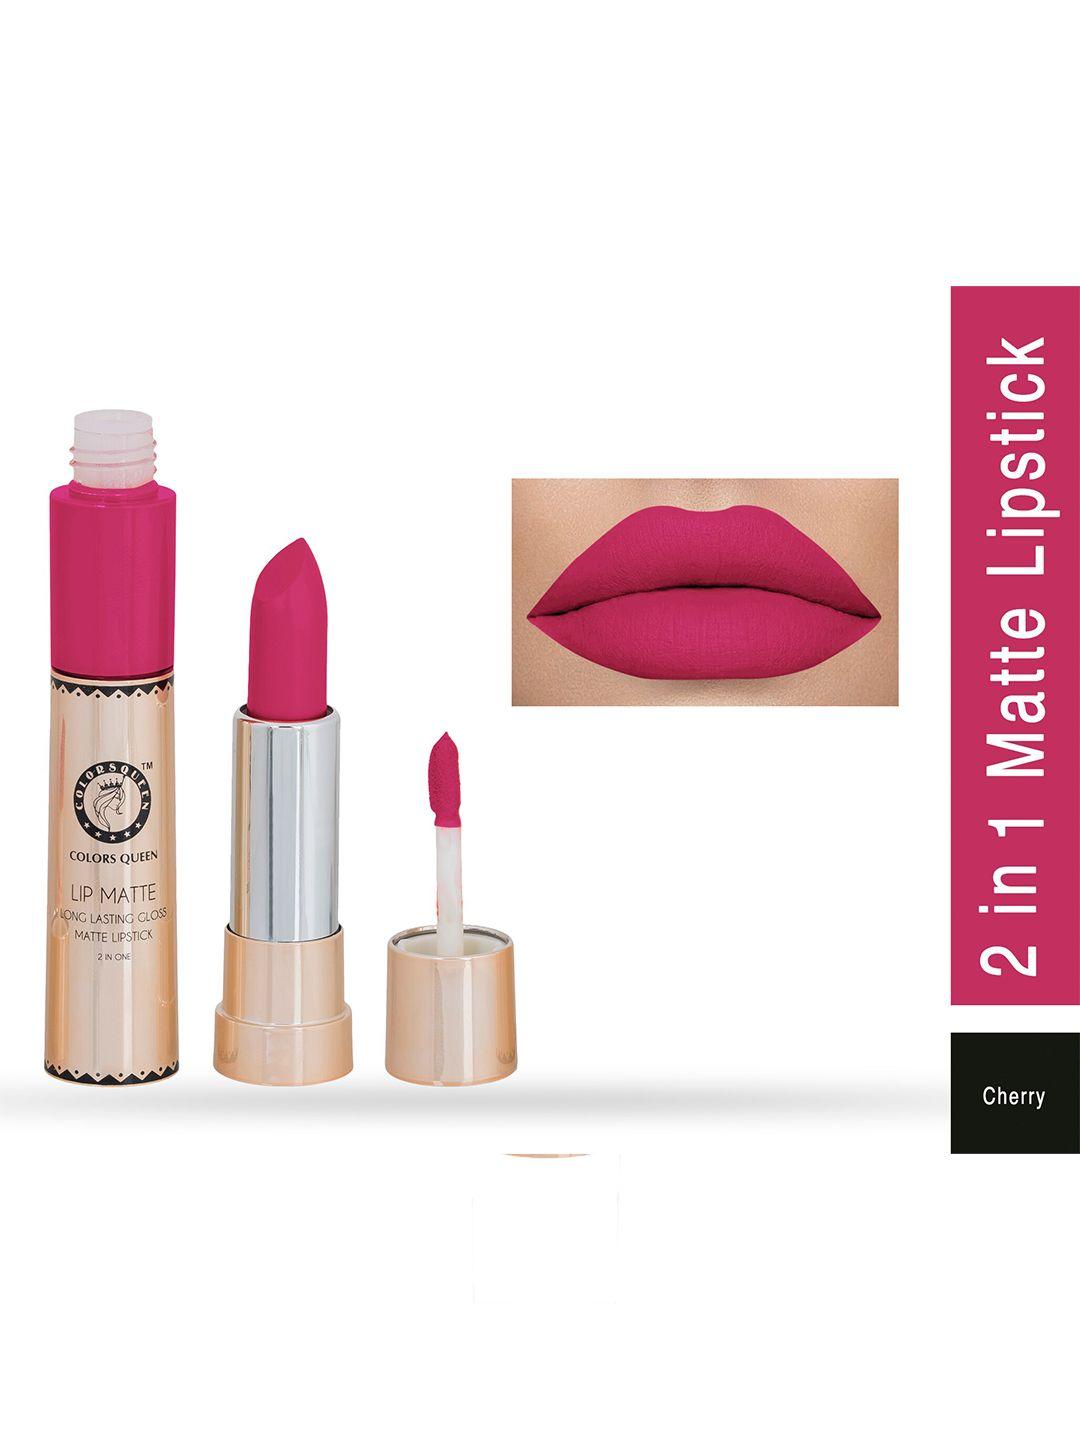 colors queen lip matte 2-in-1 long lasting gloss lipstick 8 g - cherry